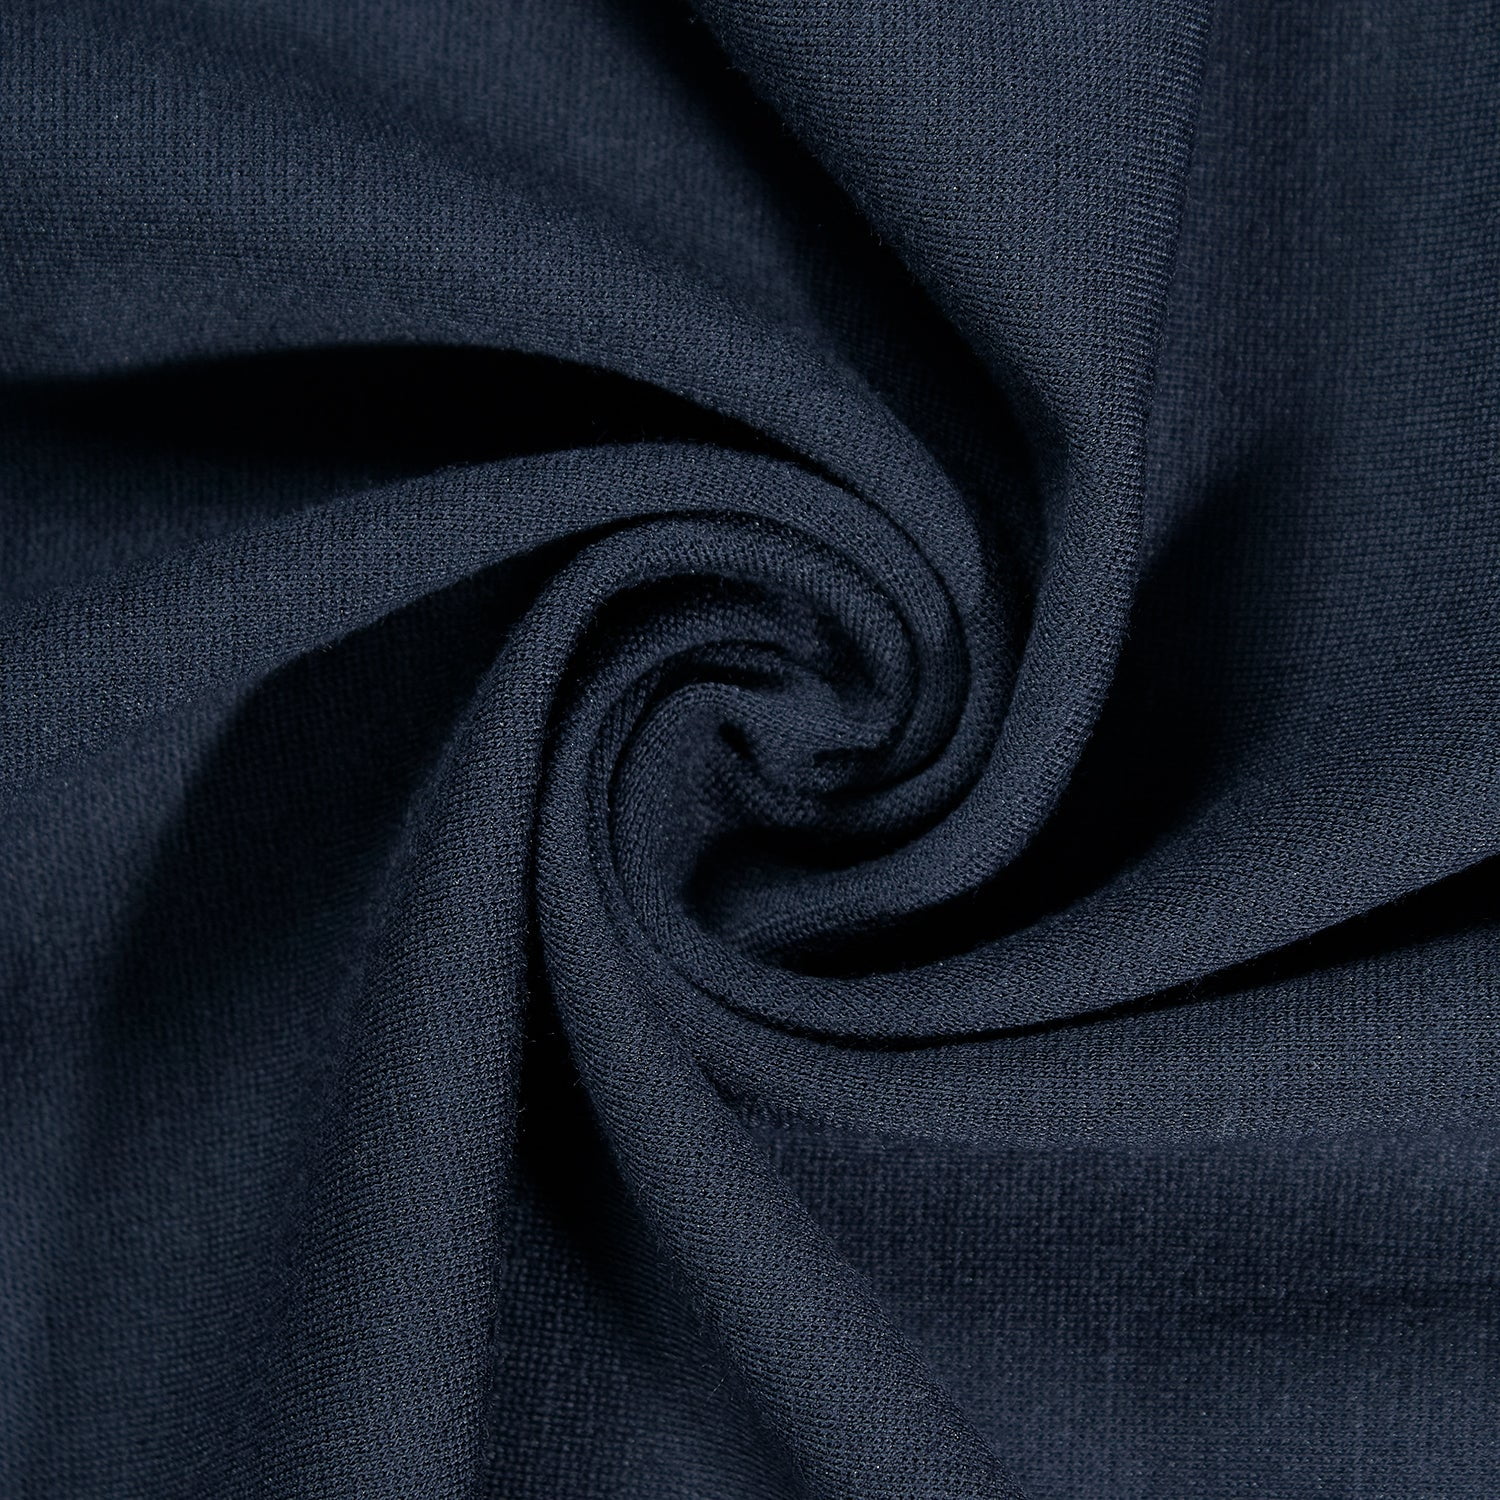 Ponte De Roma Nylon-Rayon Stretch Knit Fabric 60 Wide Many Colors Rayon  Nylon Spandex Soft BTY (Beige) 